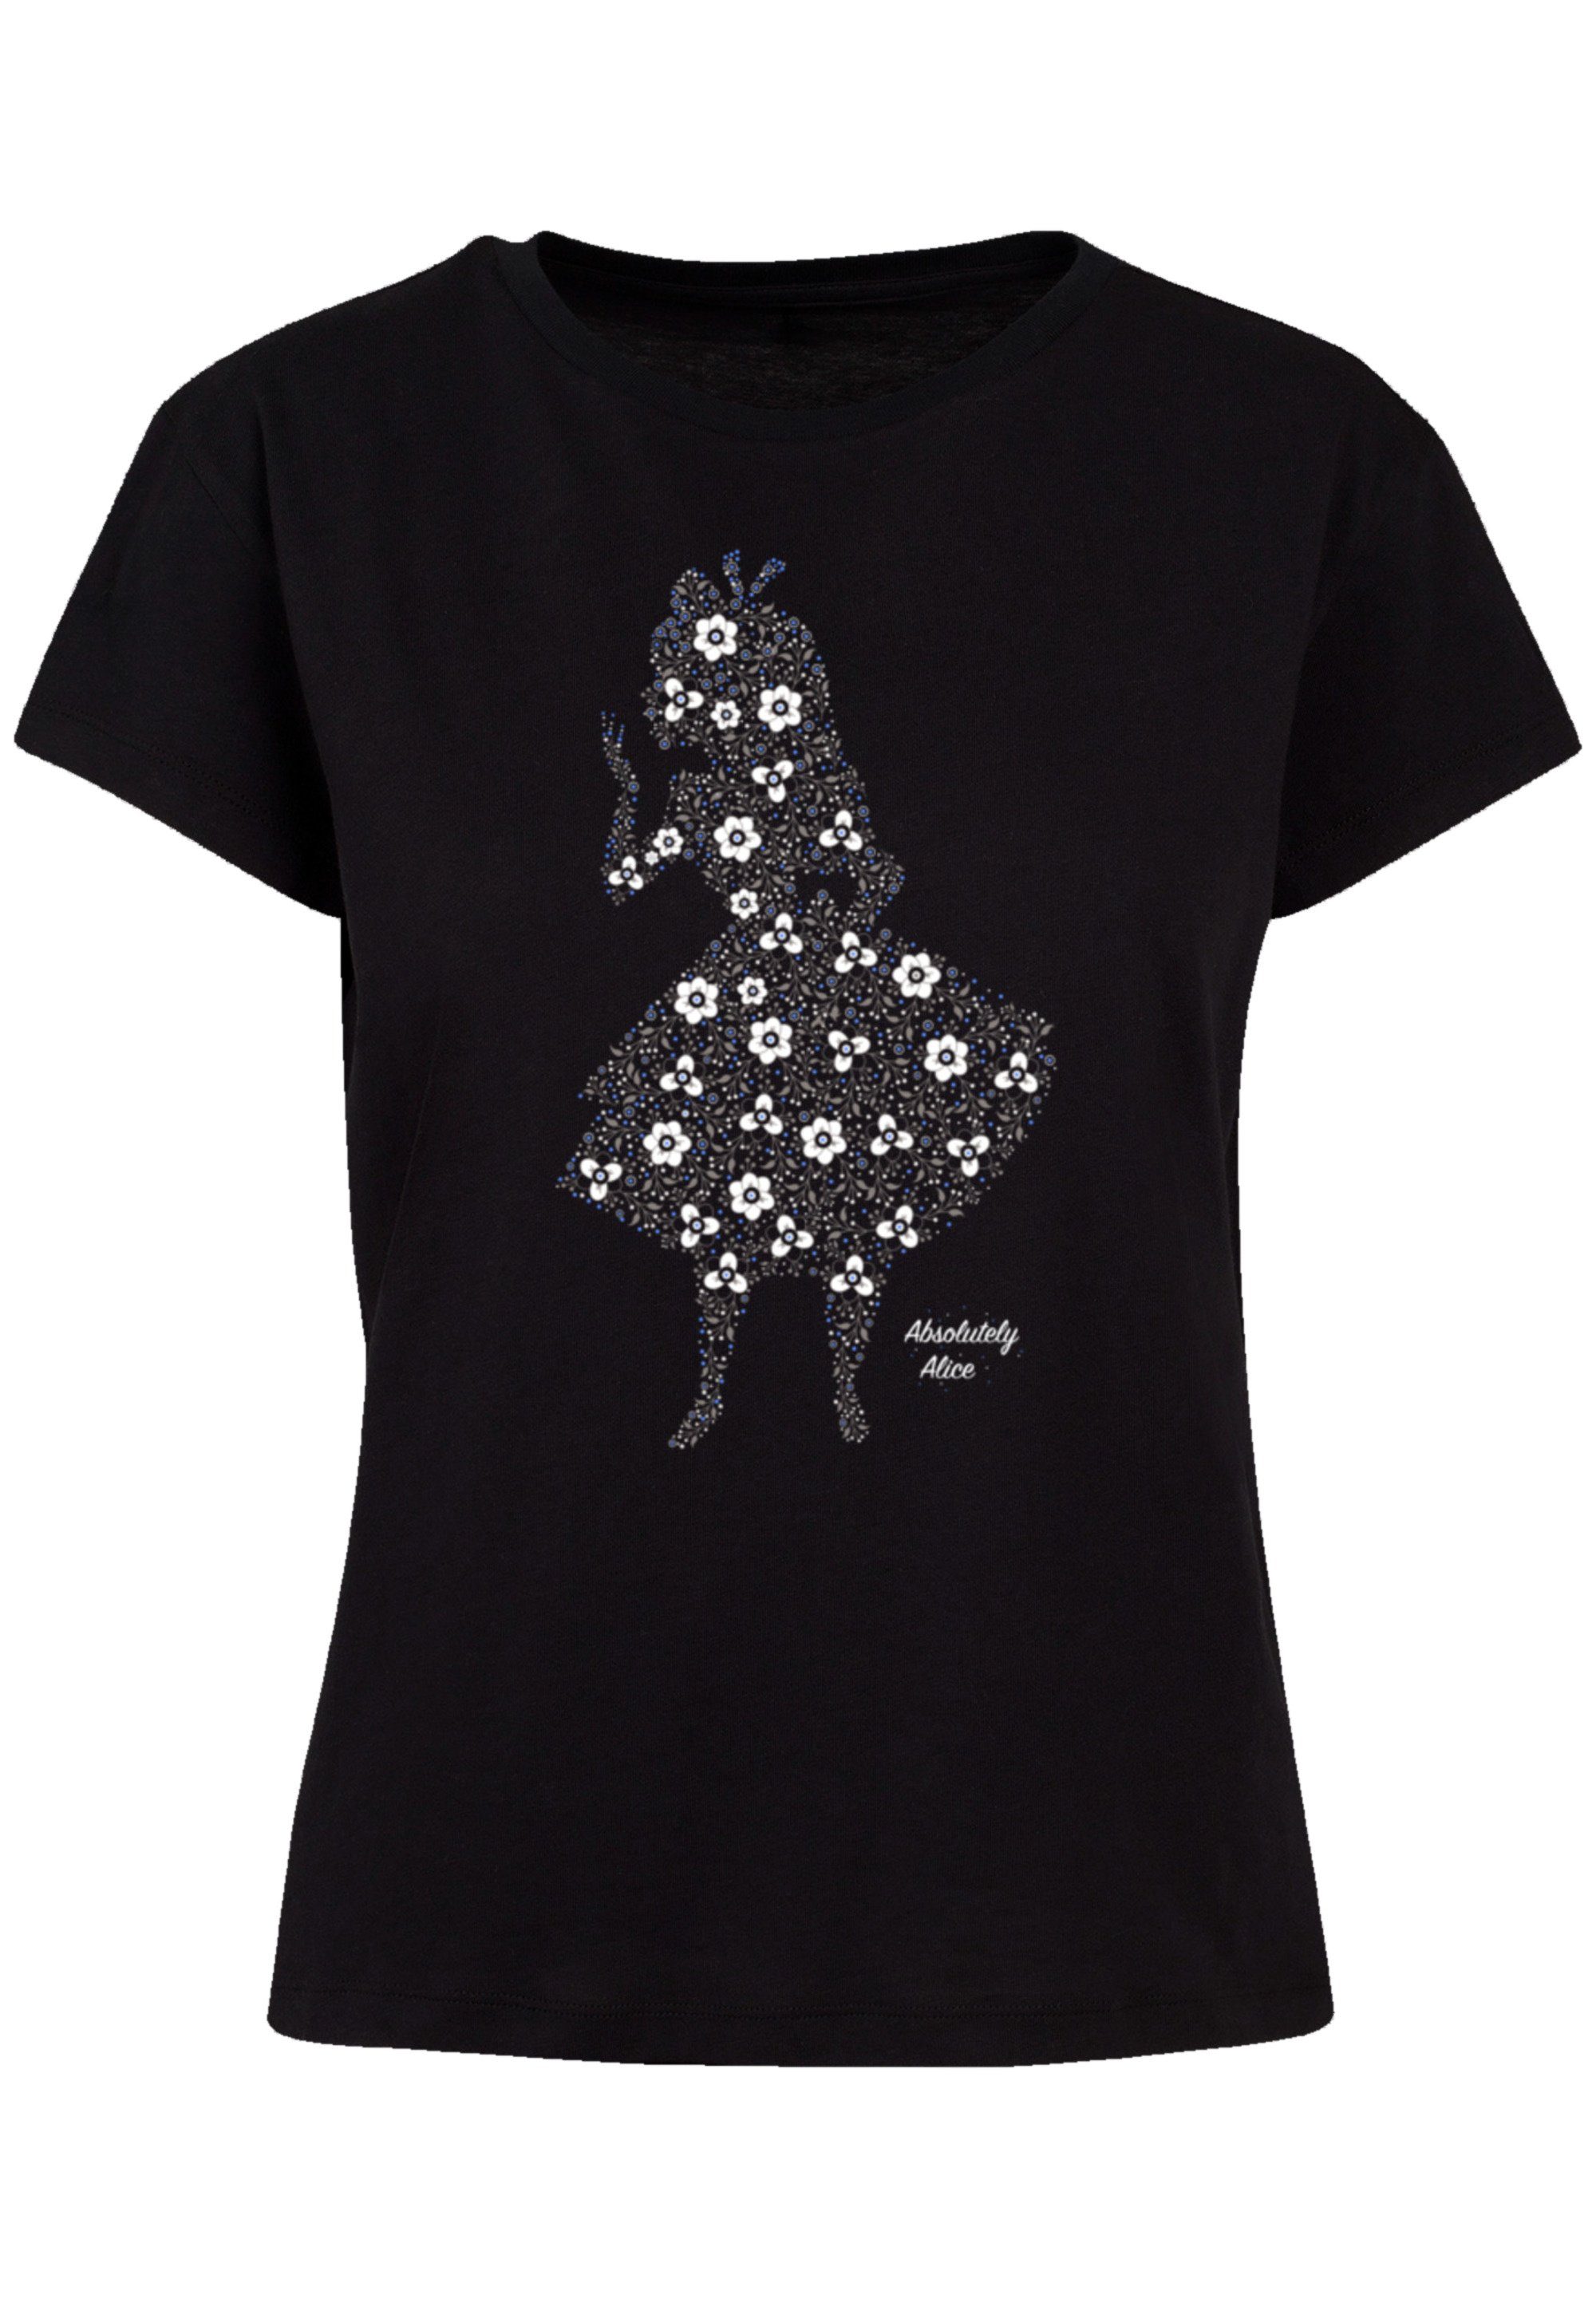 F4NT4STIC T-Shirt Disney Qualität Premium im Alice Wunderland Absolutely Alice